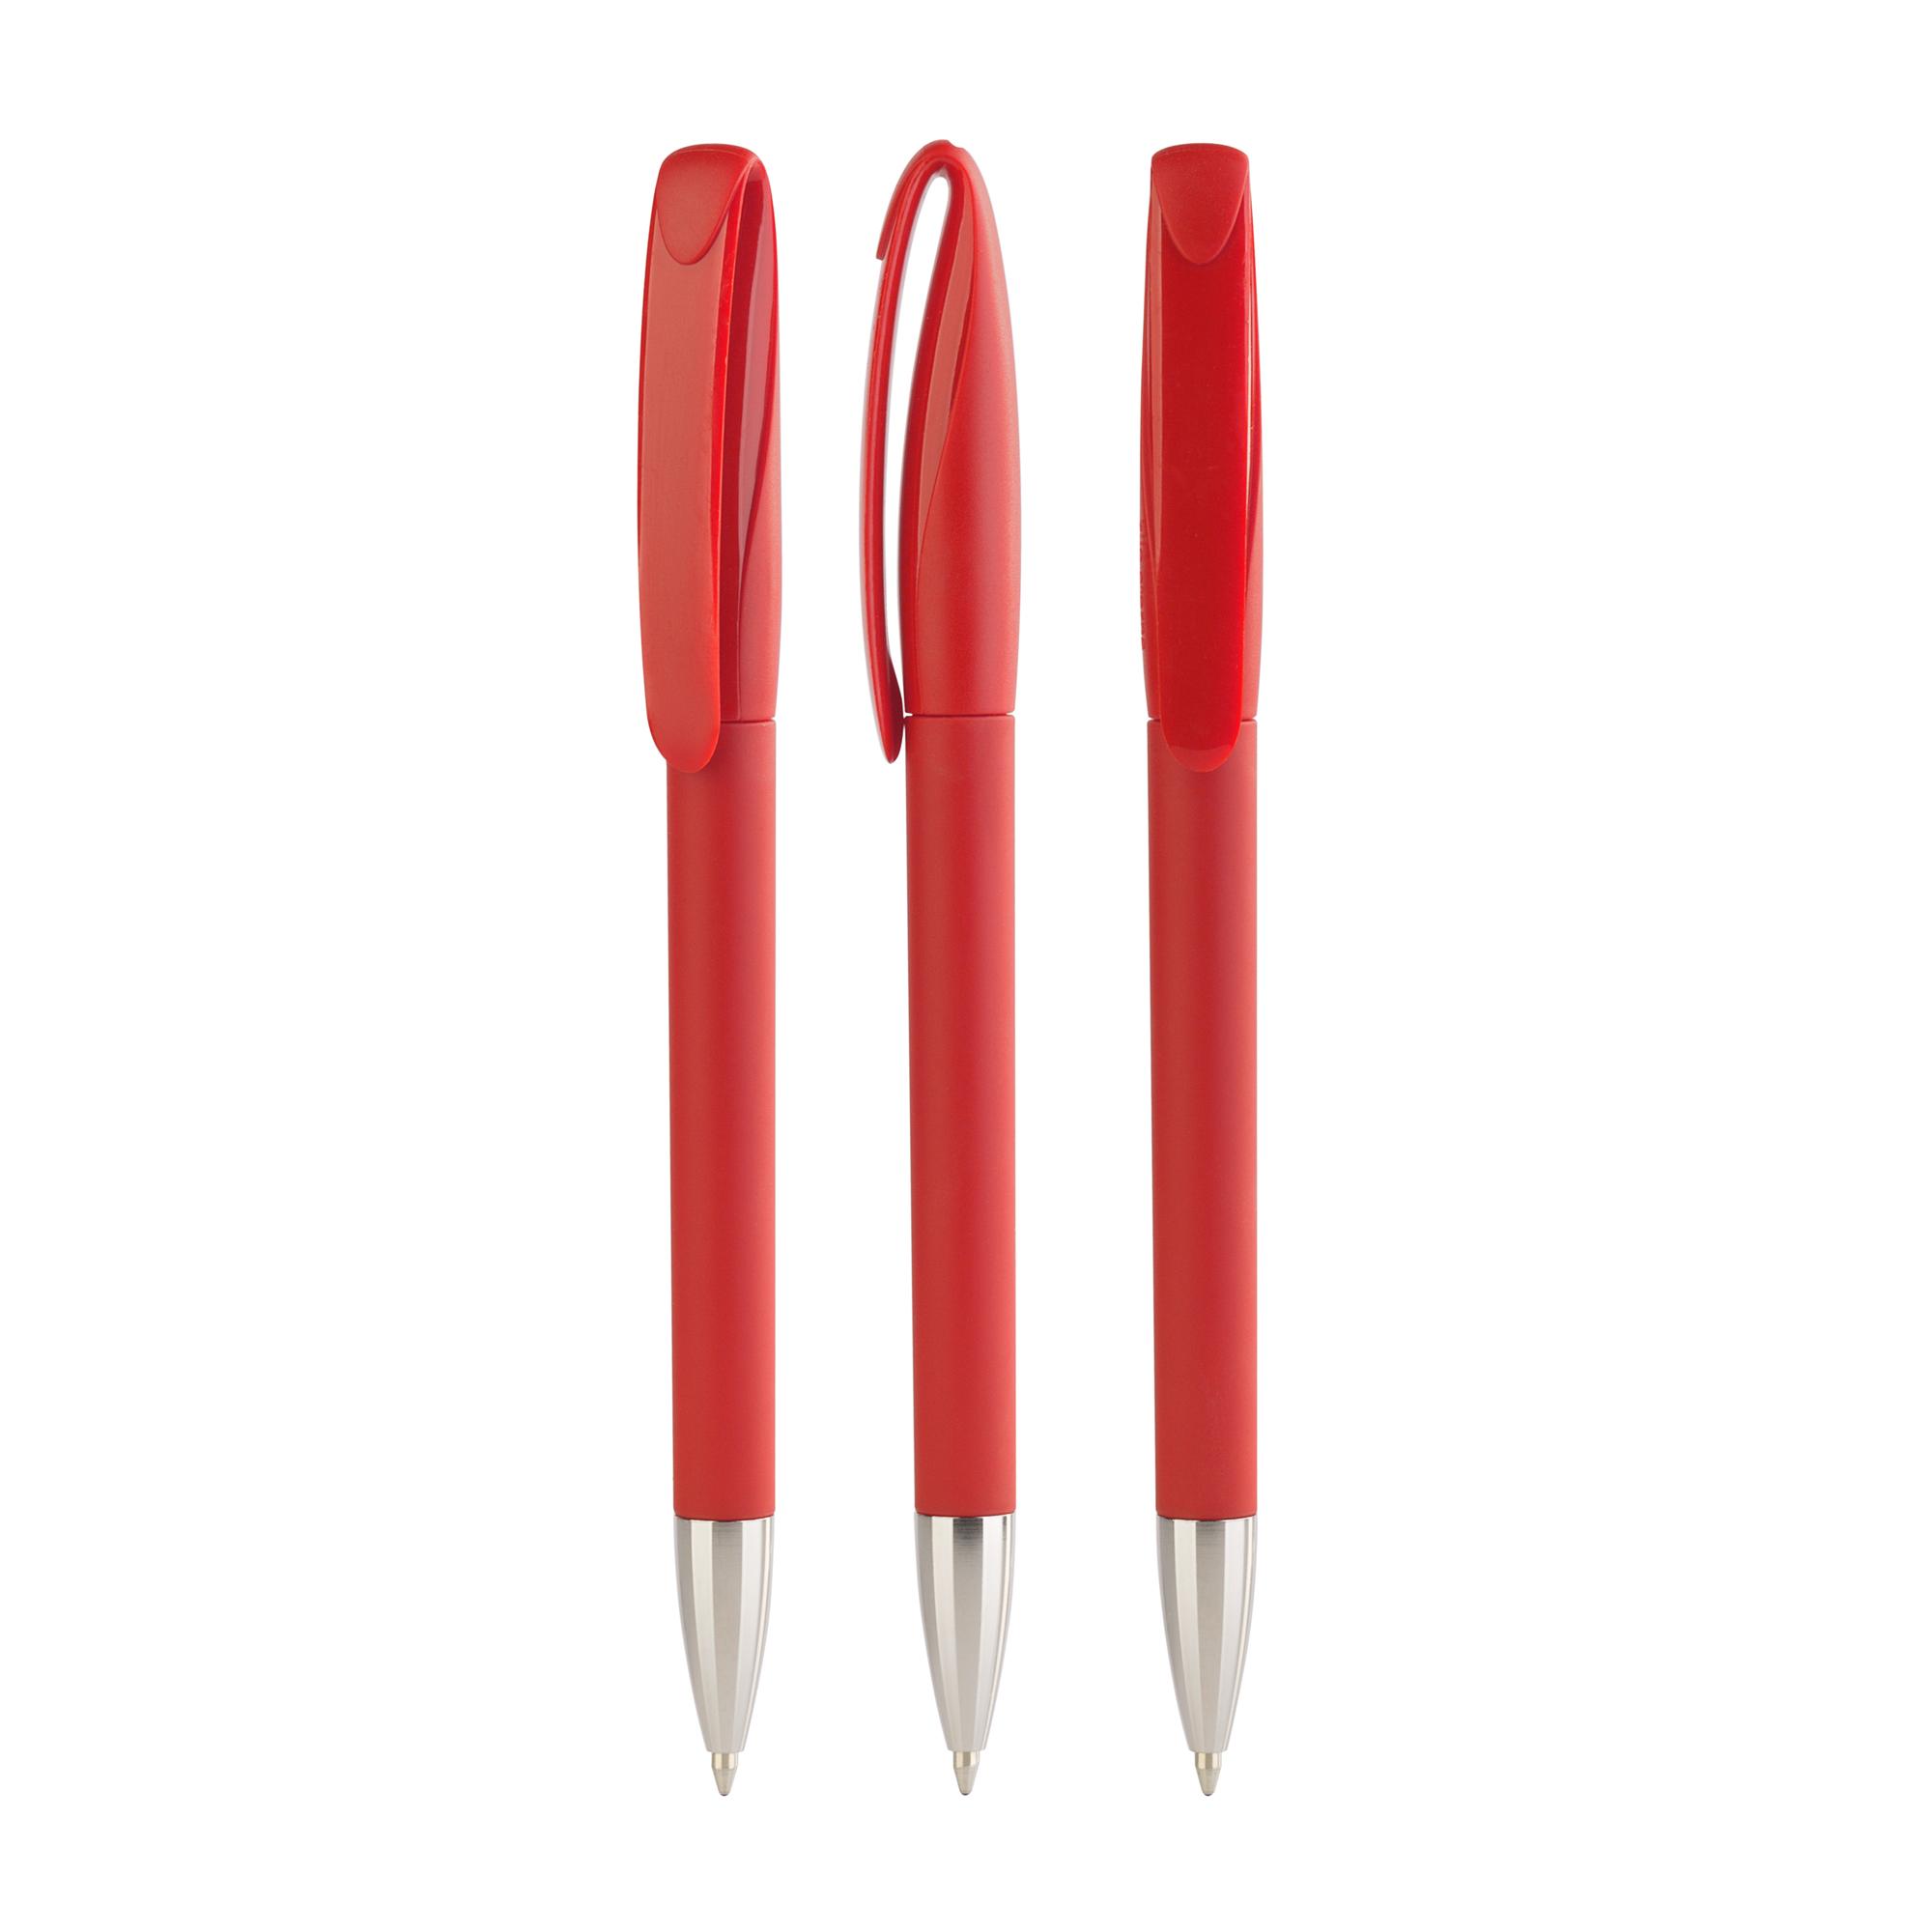 Ручка шариковая BOA SOFTTOUCH M, покрытие soft touch, цвет красный, фото 1